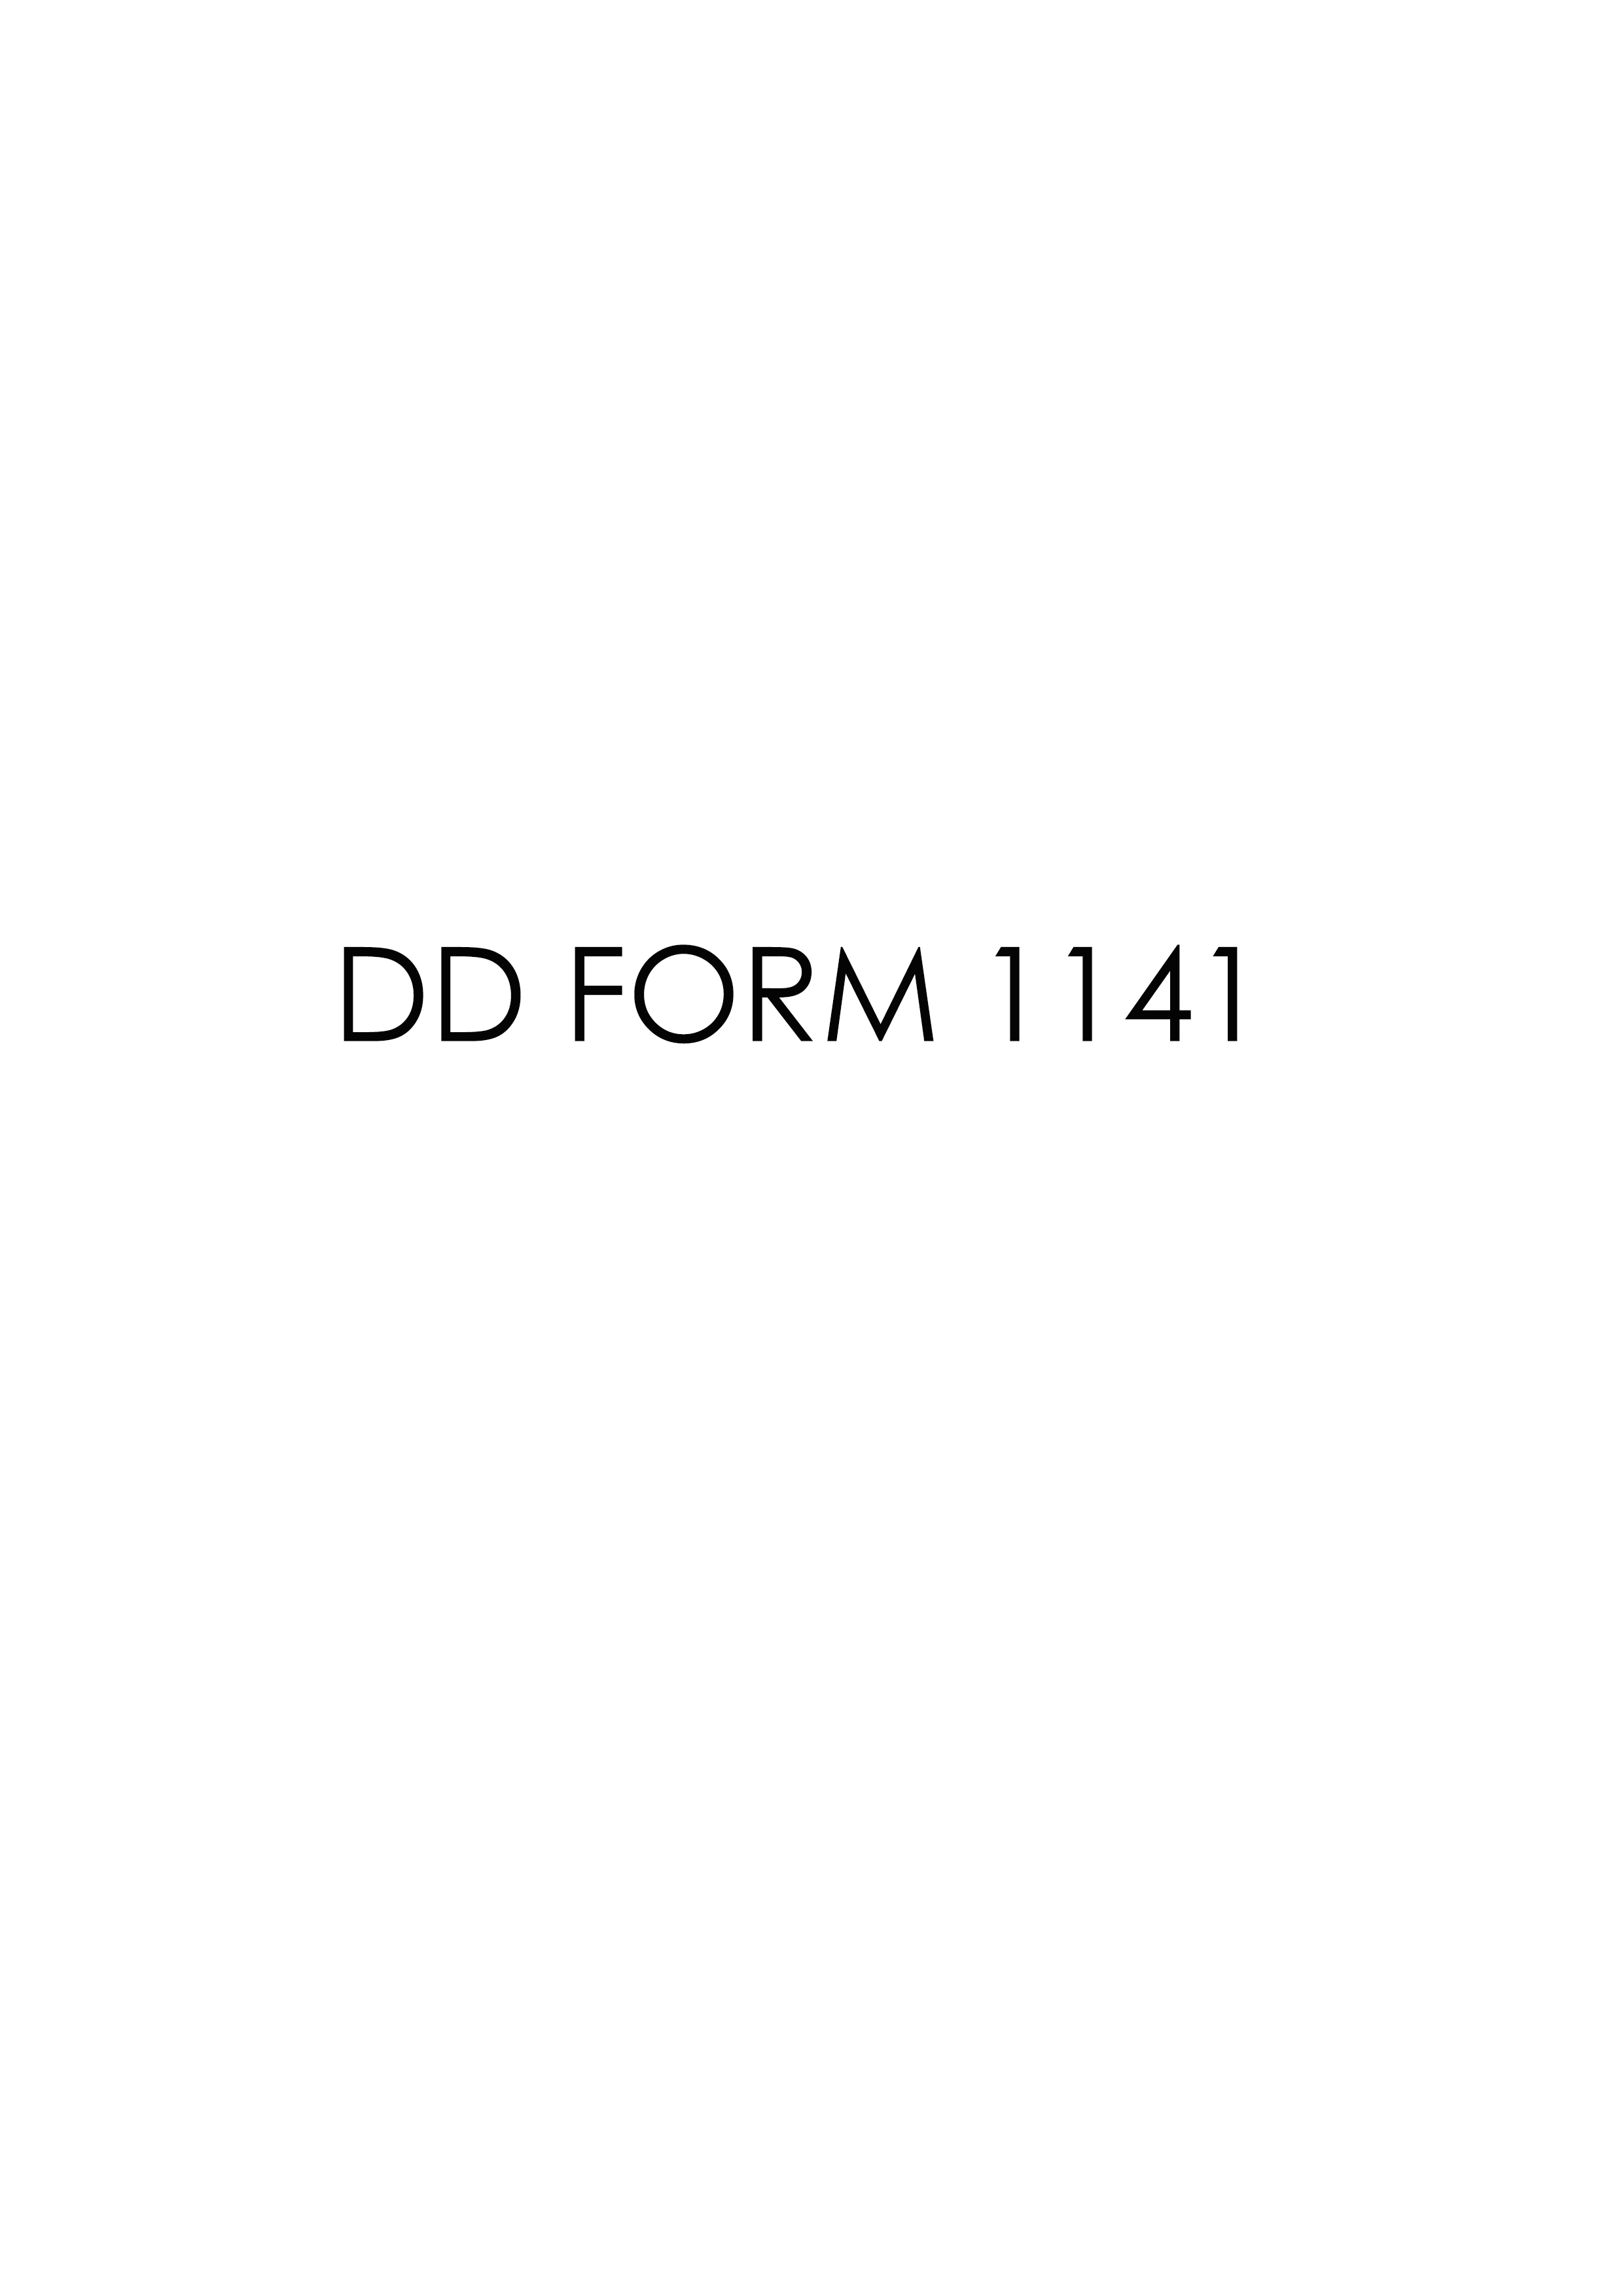 Download dd 1141 Form